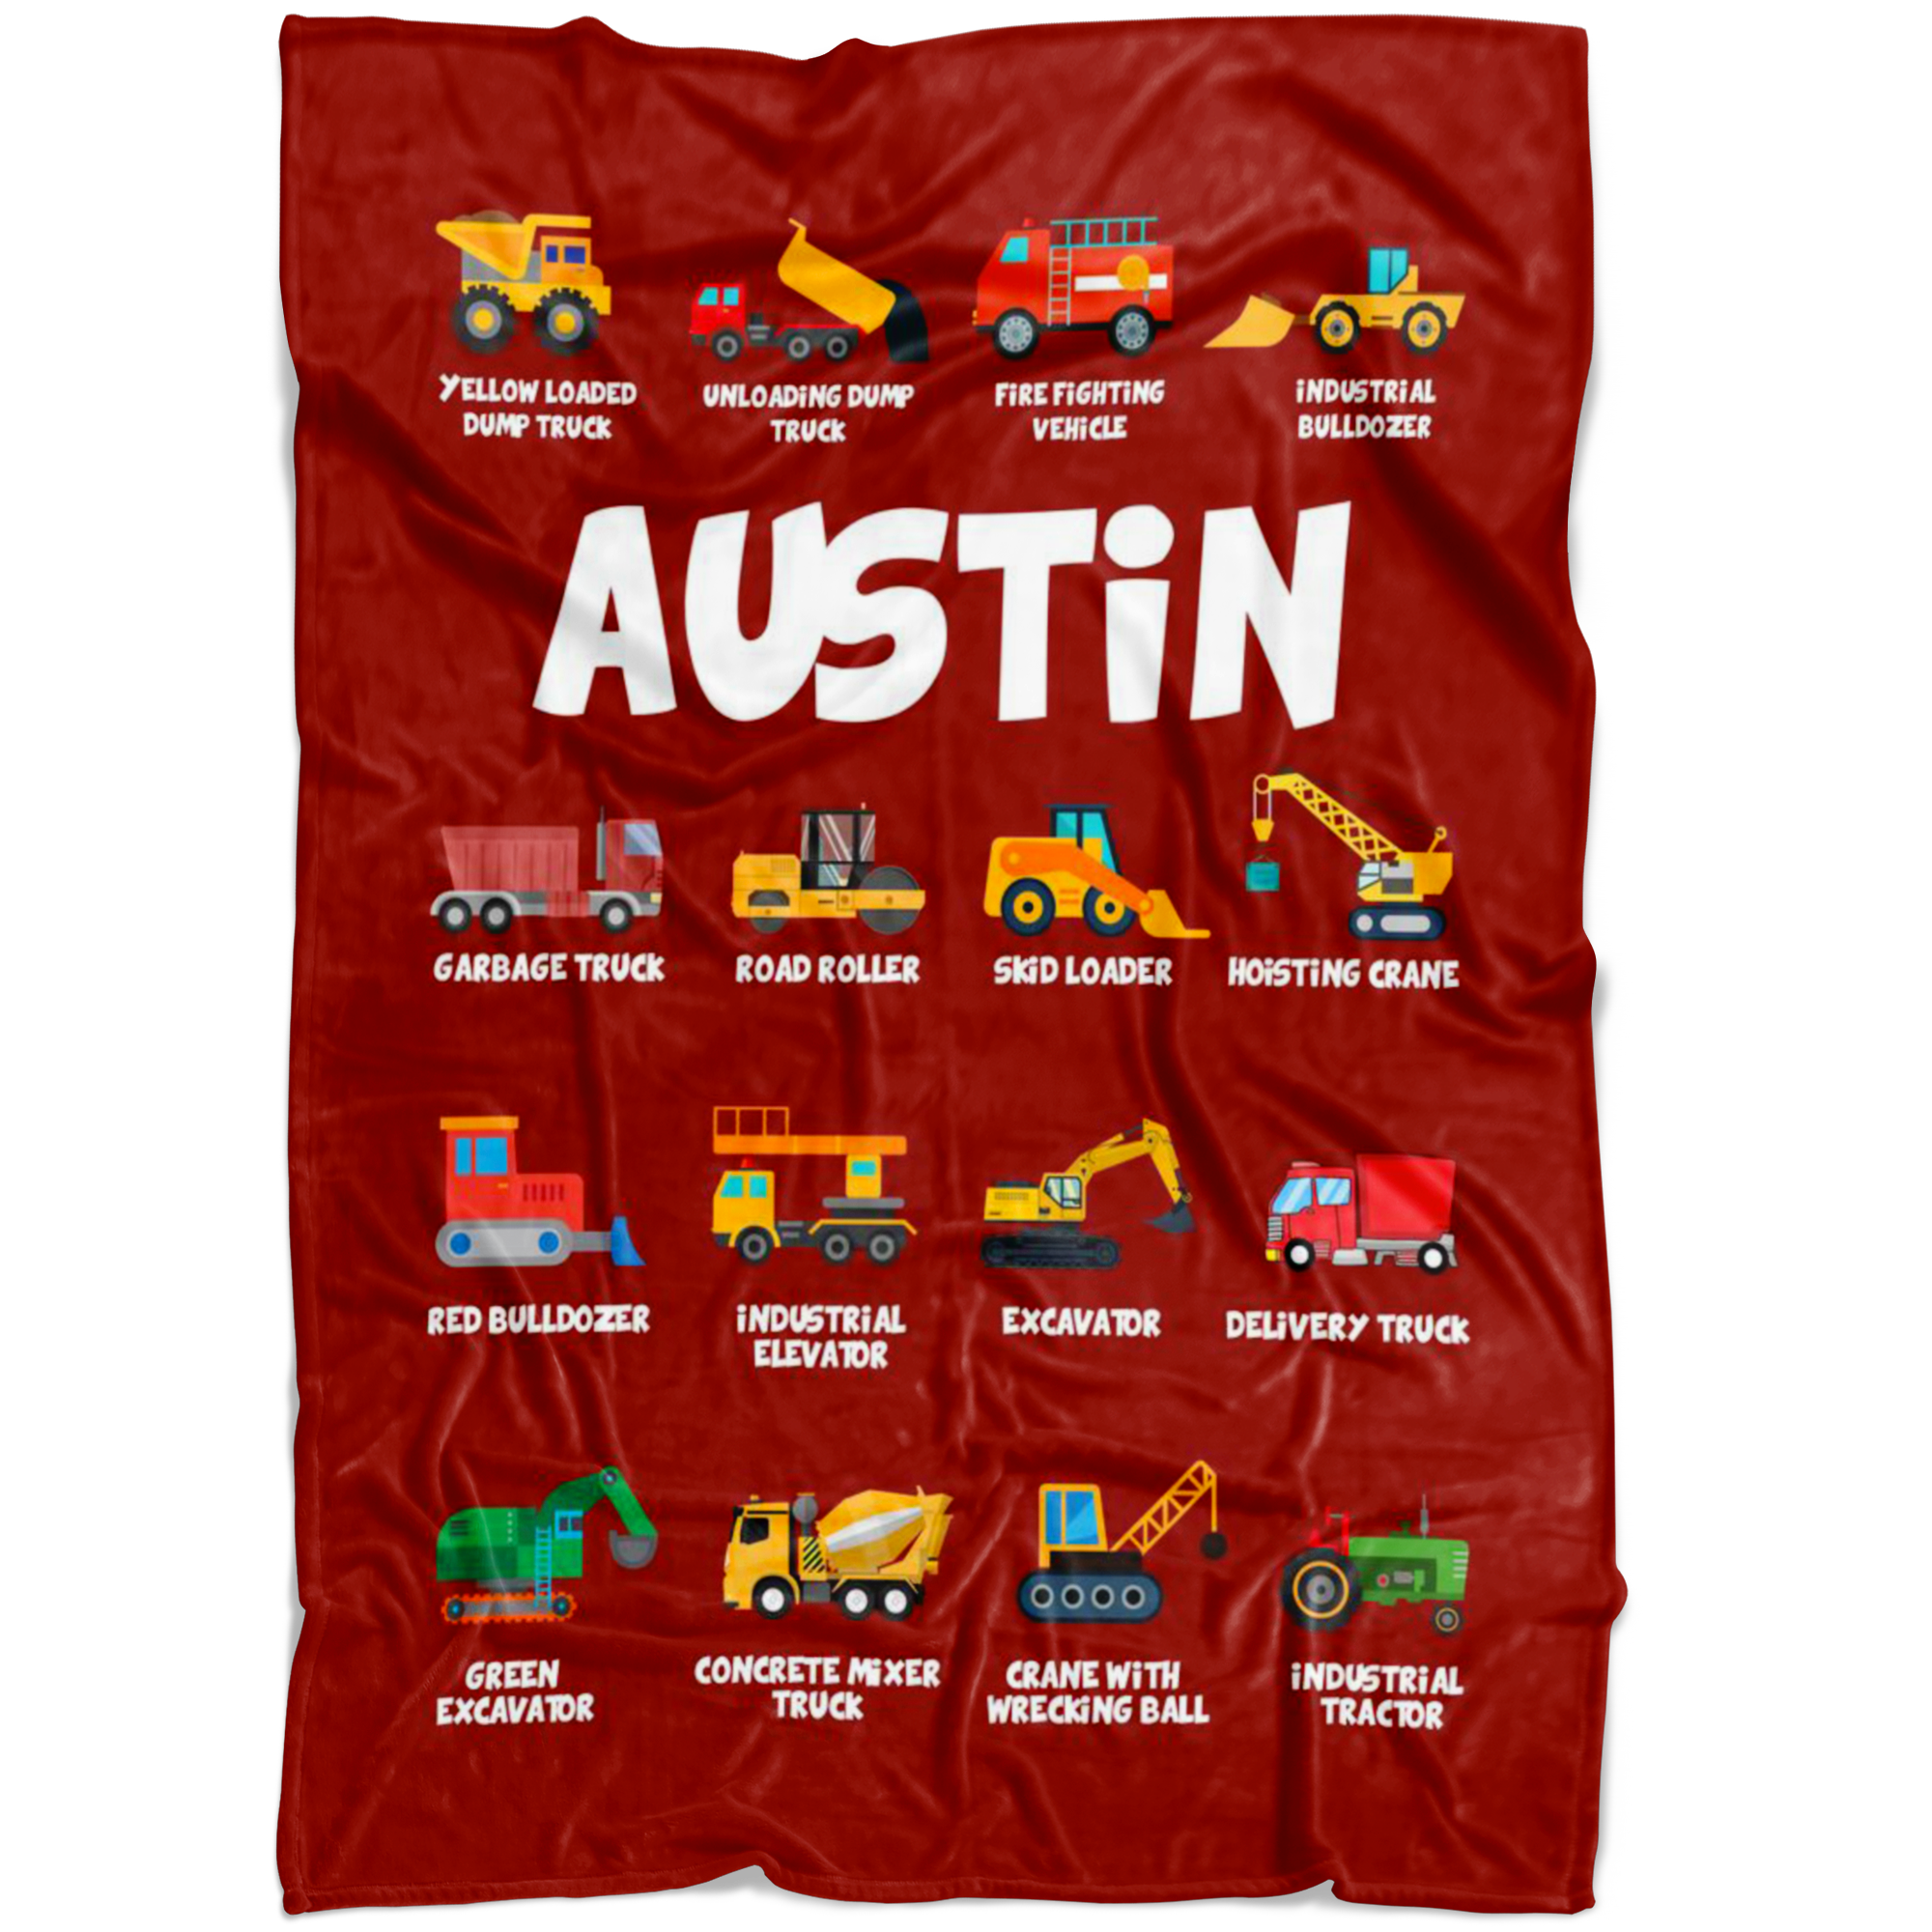 Austin Construction Blanket Red